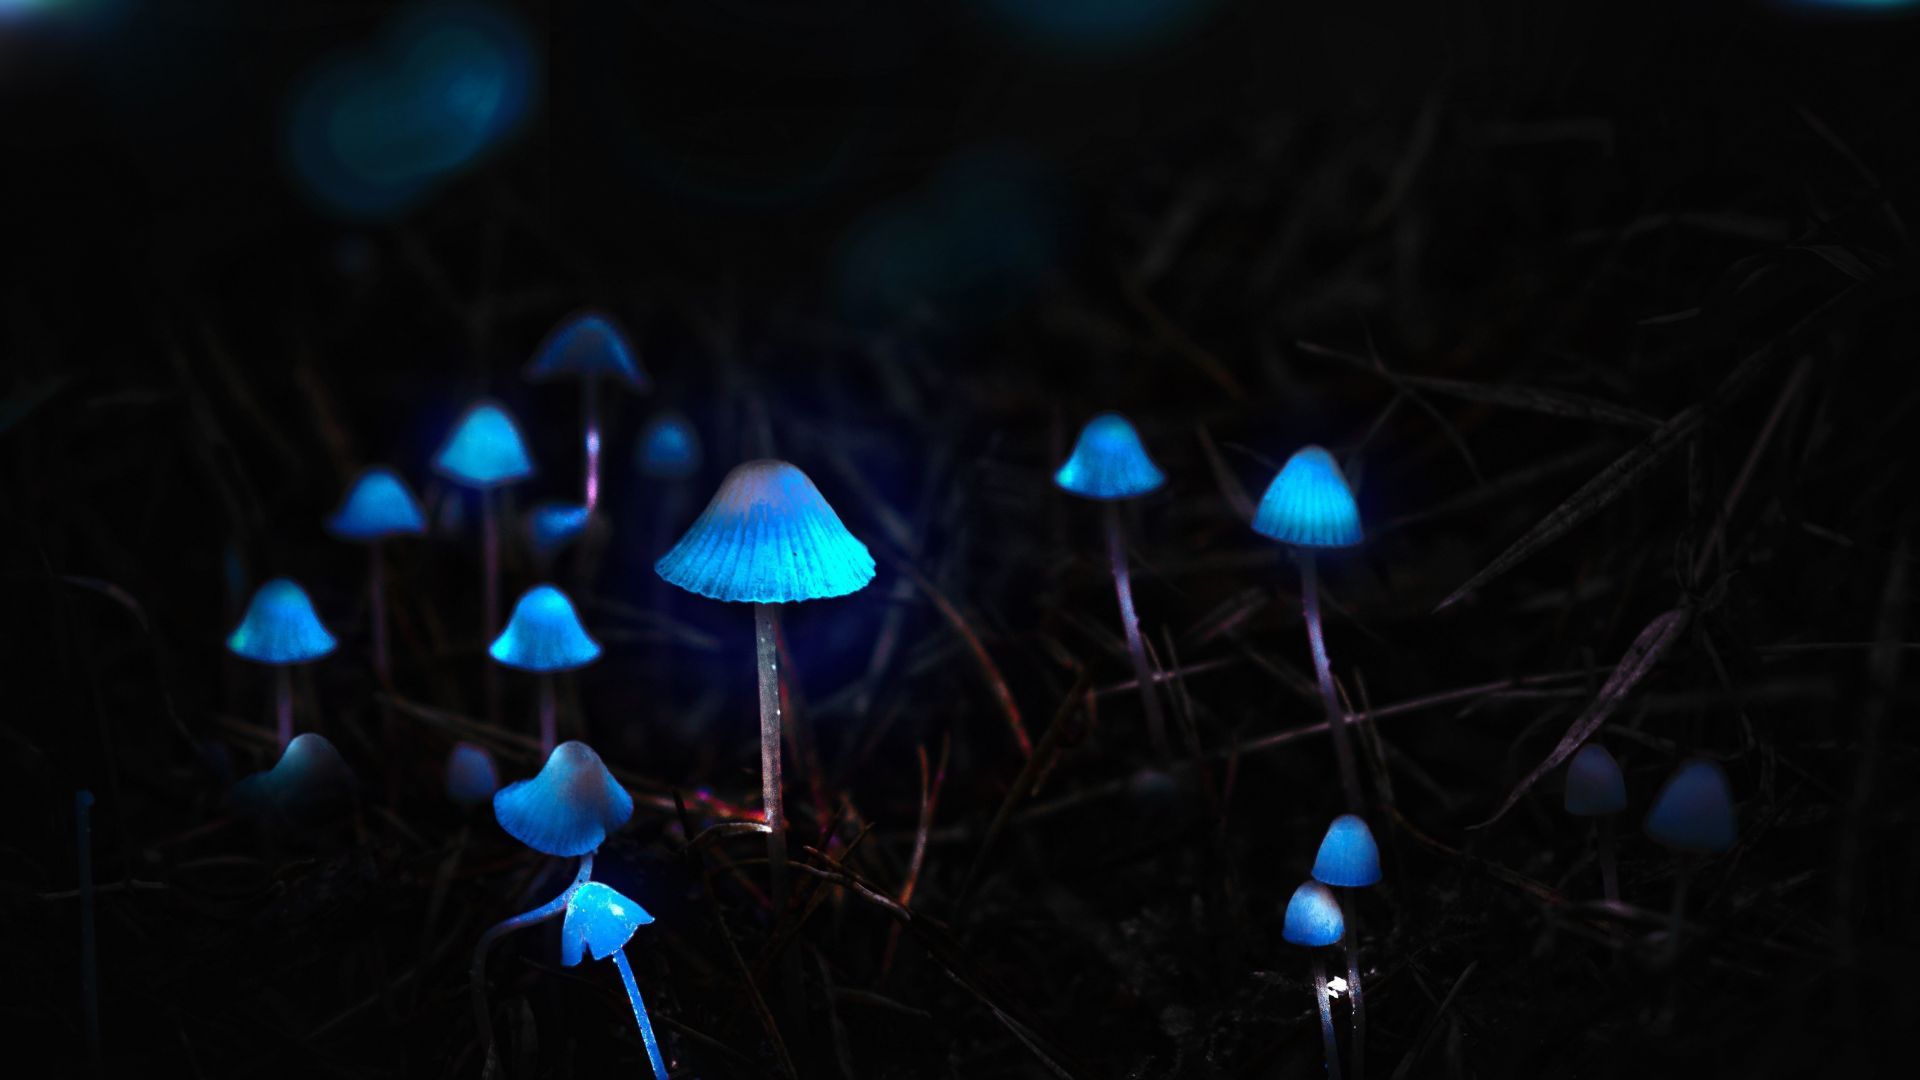 Desktop wallpapers mushrooms, toadstools, portrait, blue glow, hd image, picture, background, df85d9